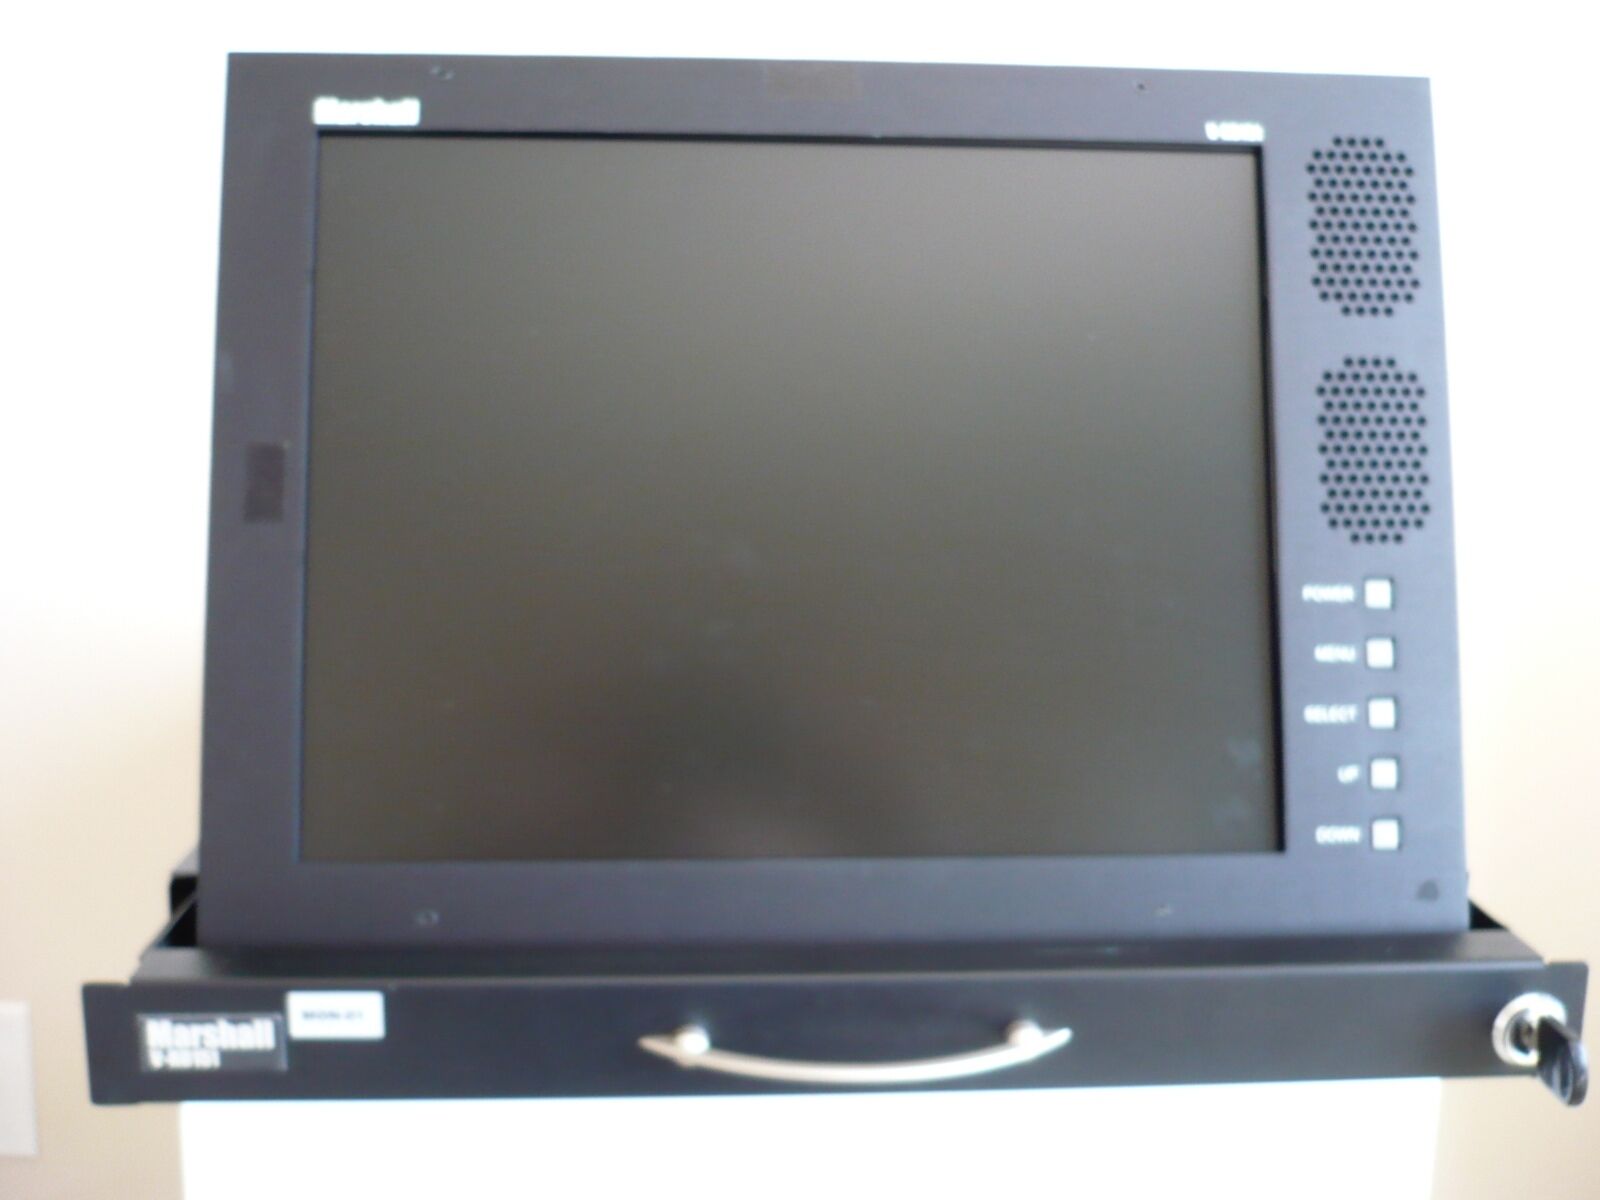 Marshall V-RD151 1RU drawer/rack mountable 15" LCD monitor Transvideo/Astro/Bon